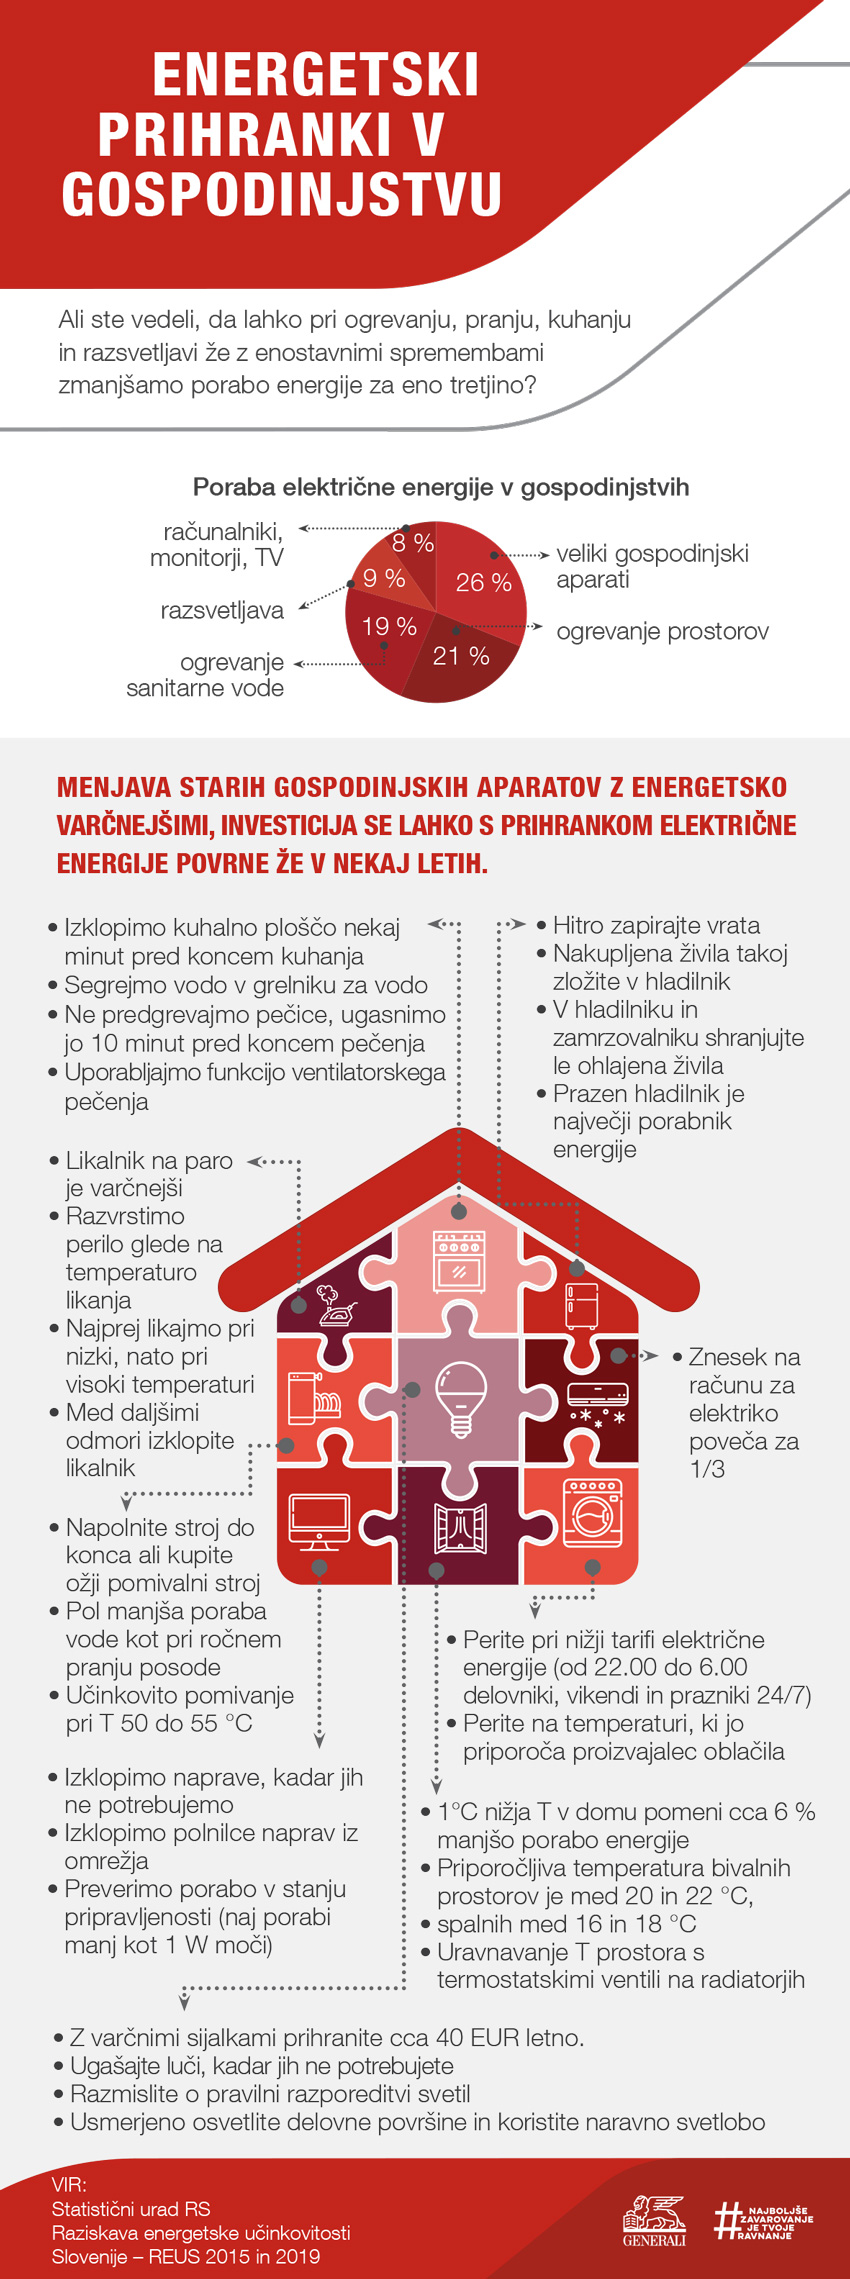 Infografika o energetskih prihrankih v gospodinjstvu